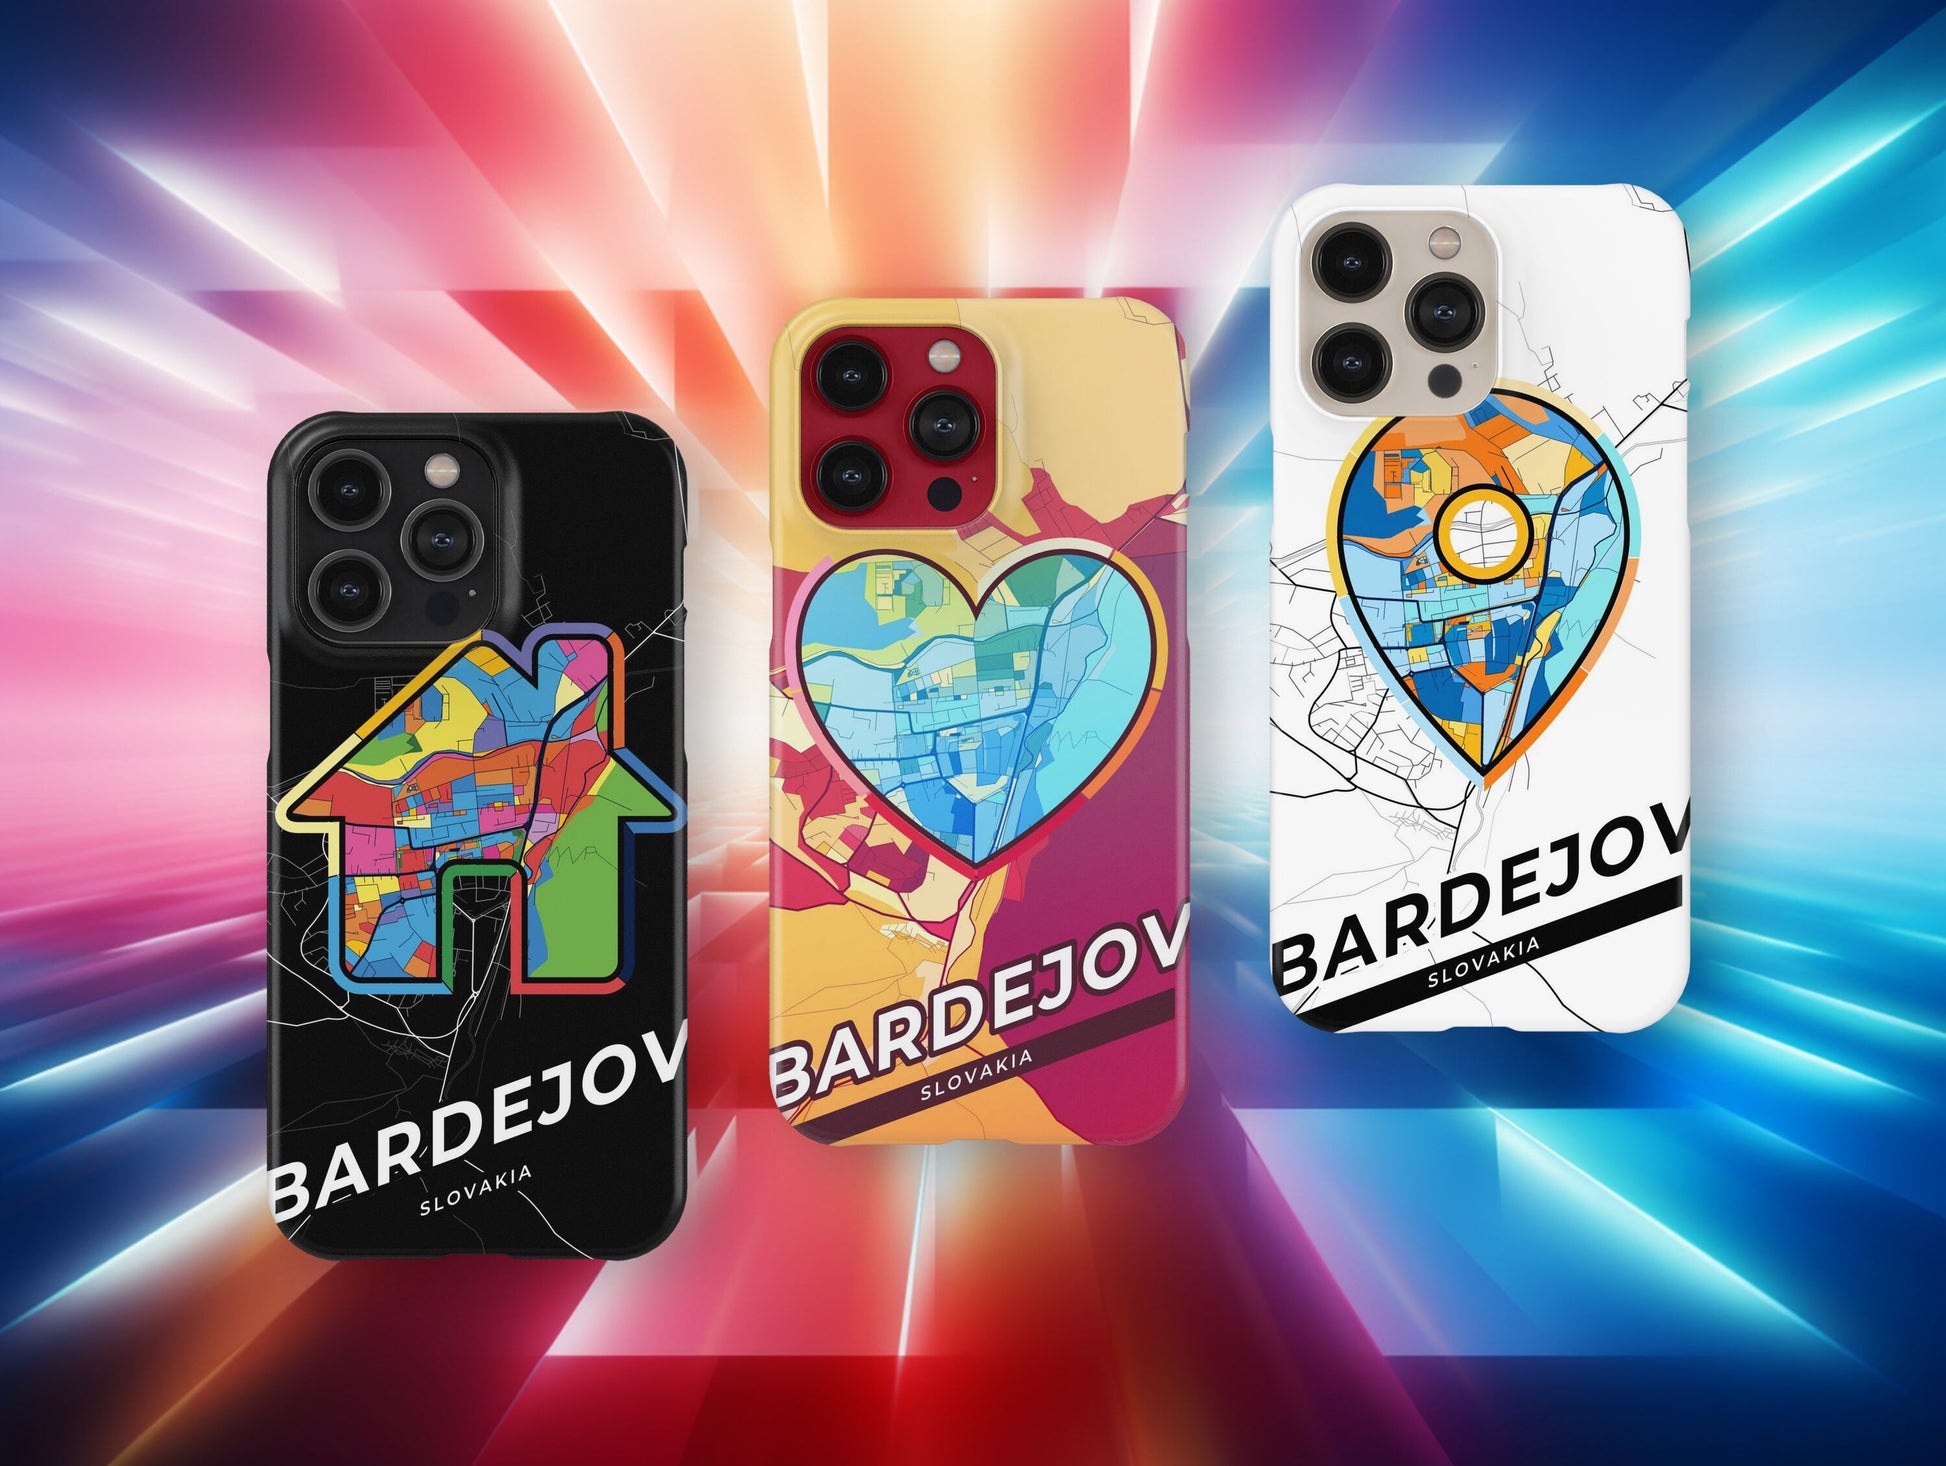 Bardejov Slovakia slim phone case with colorful icon. Birthday, wedding or housewarming gift. Couple match cases.